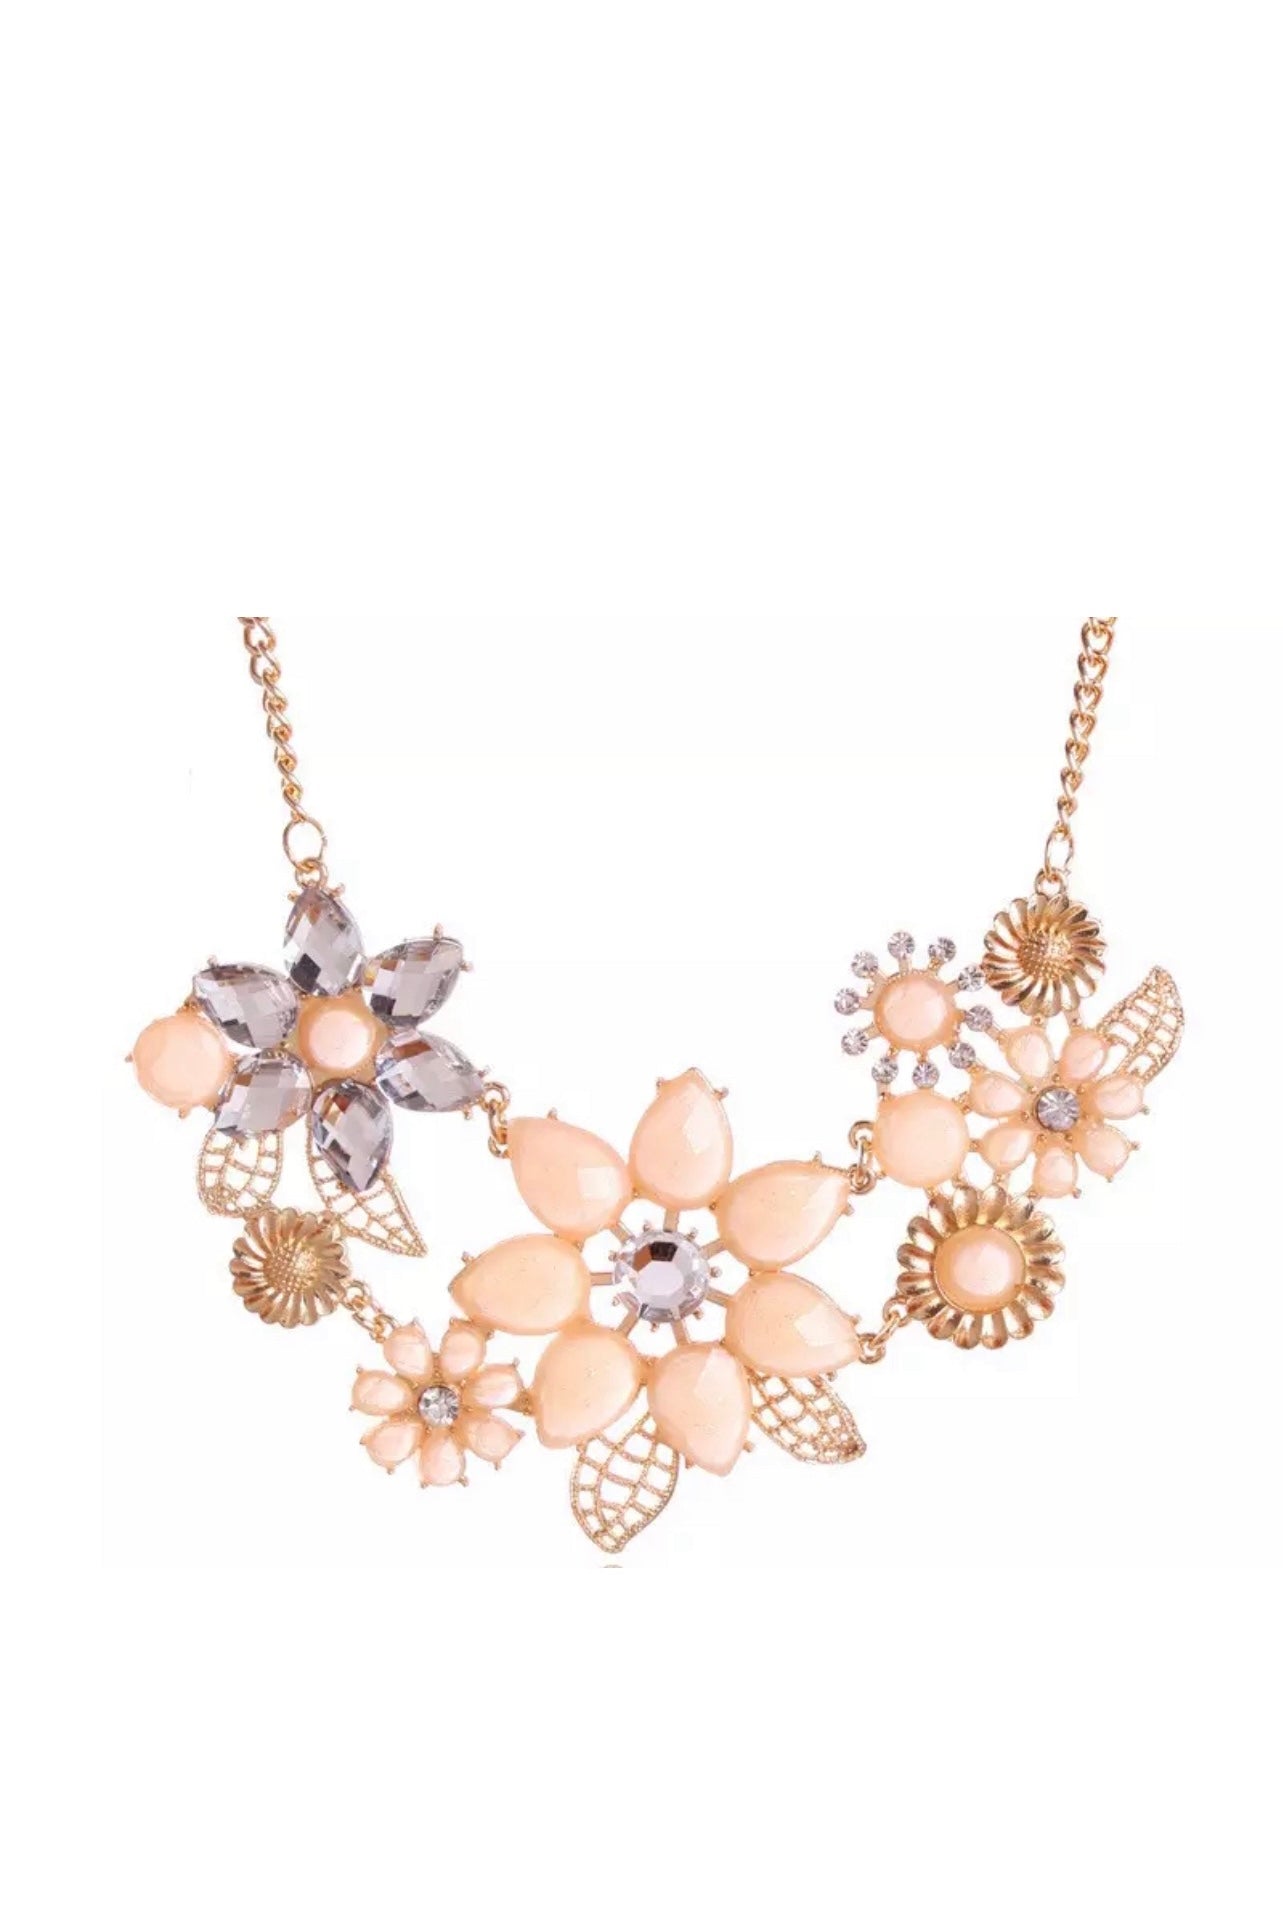 019- Orange and clear rhinestone flower necklace